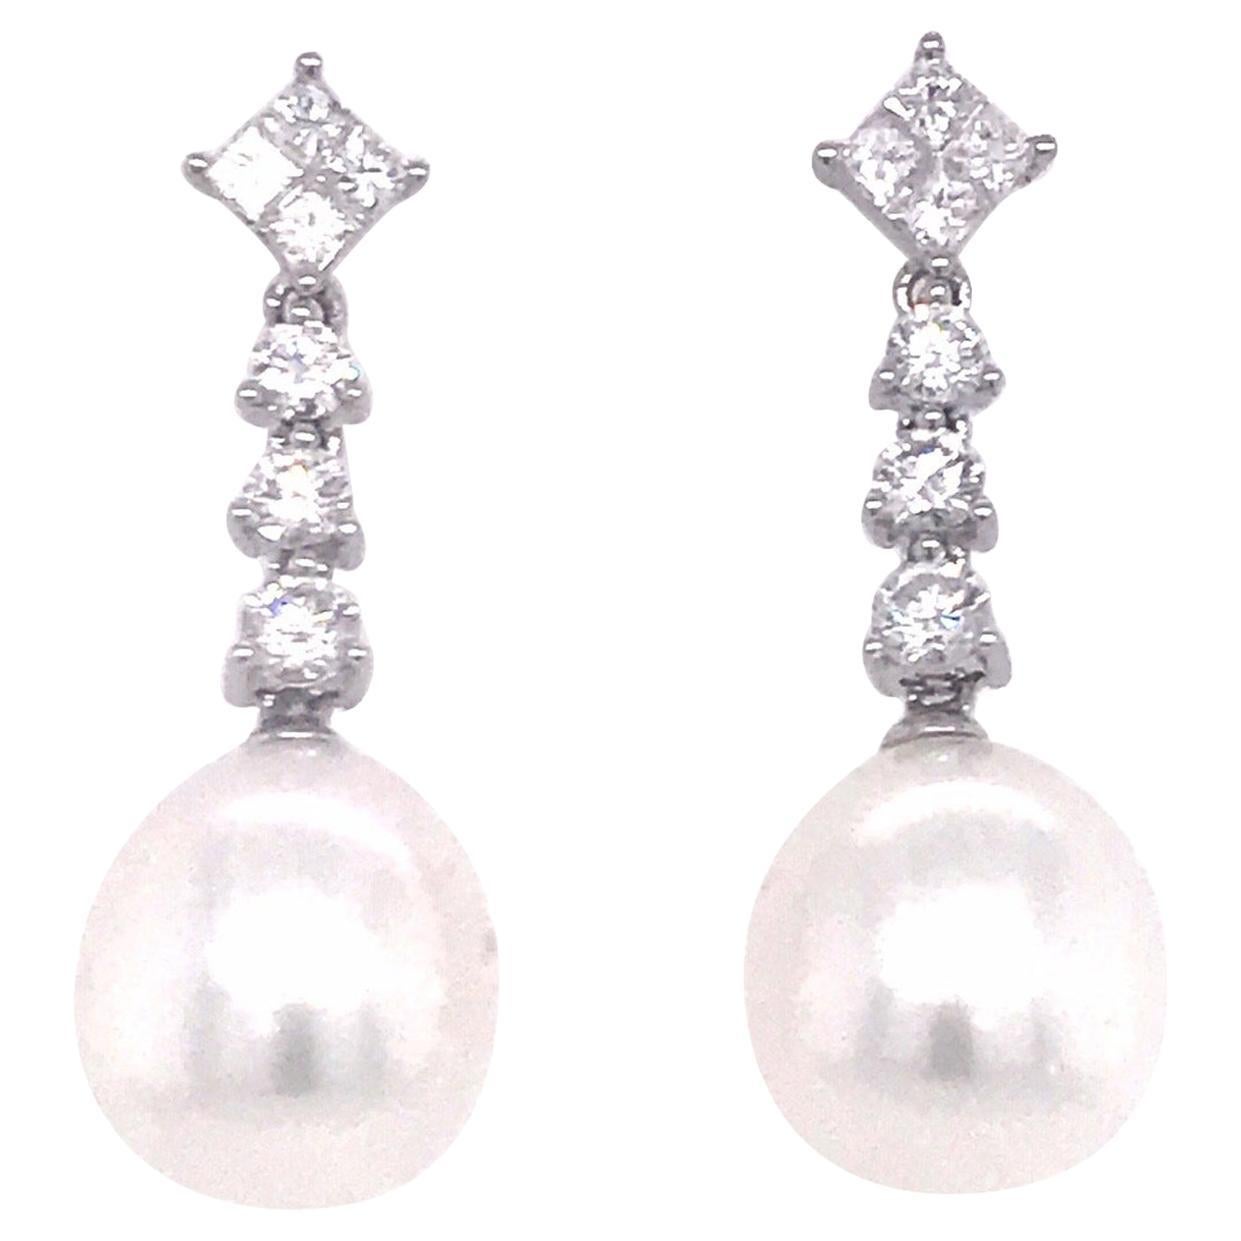 South Sea Pearl Diamond Drop Earrings 1 Carat 18 Karat White Gold 11-12MM